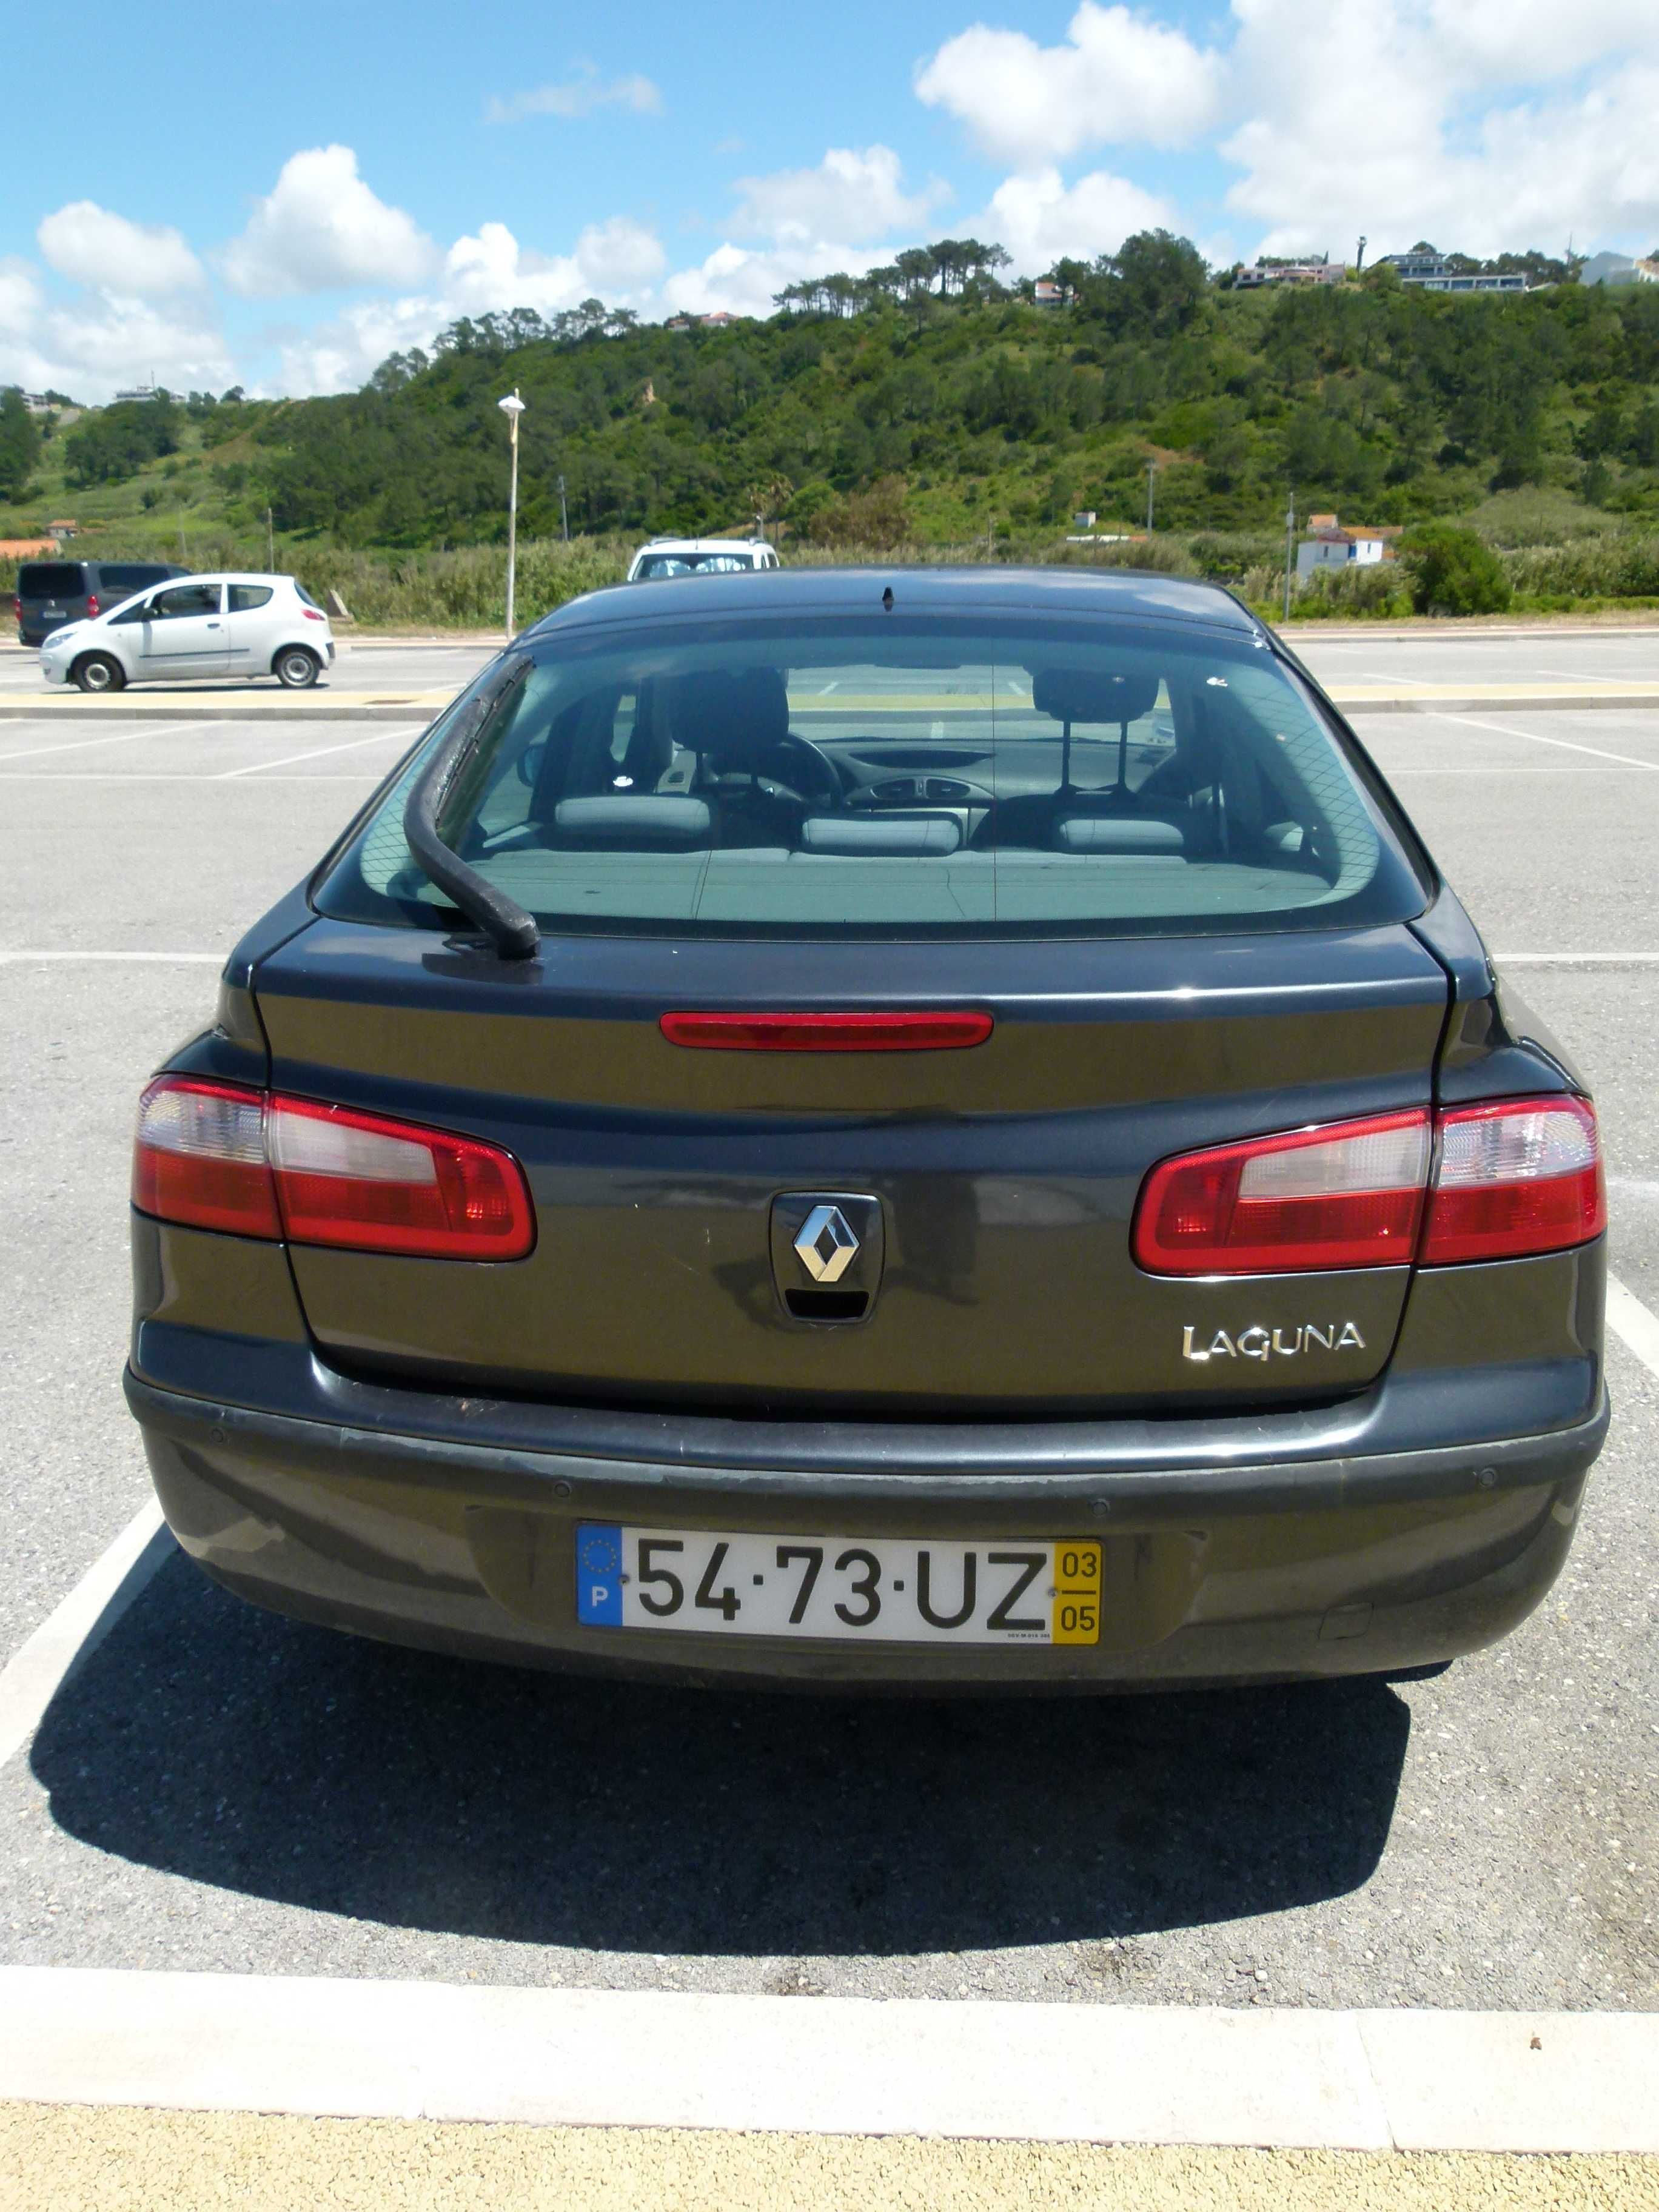 Renault Laguna estimado